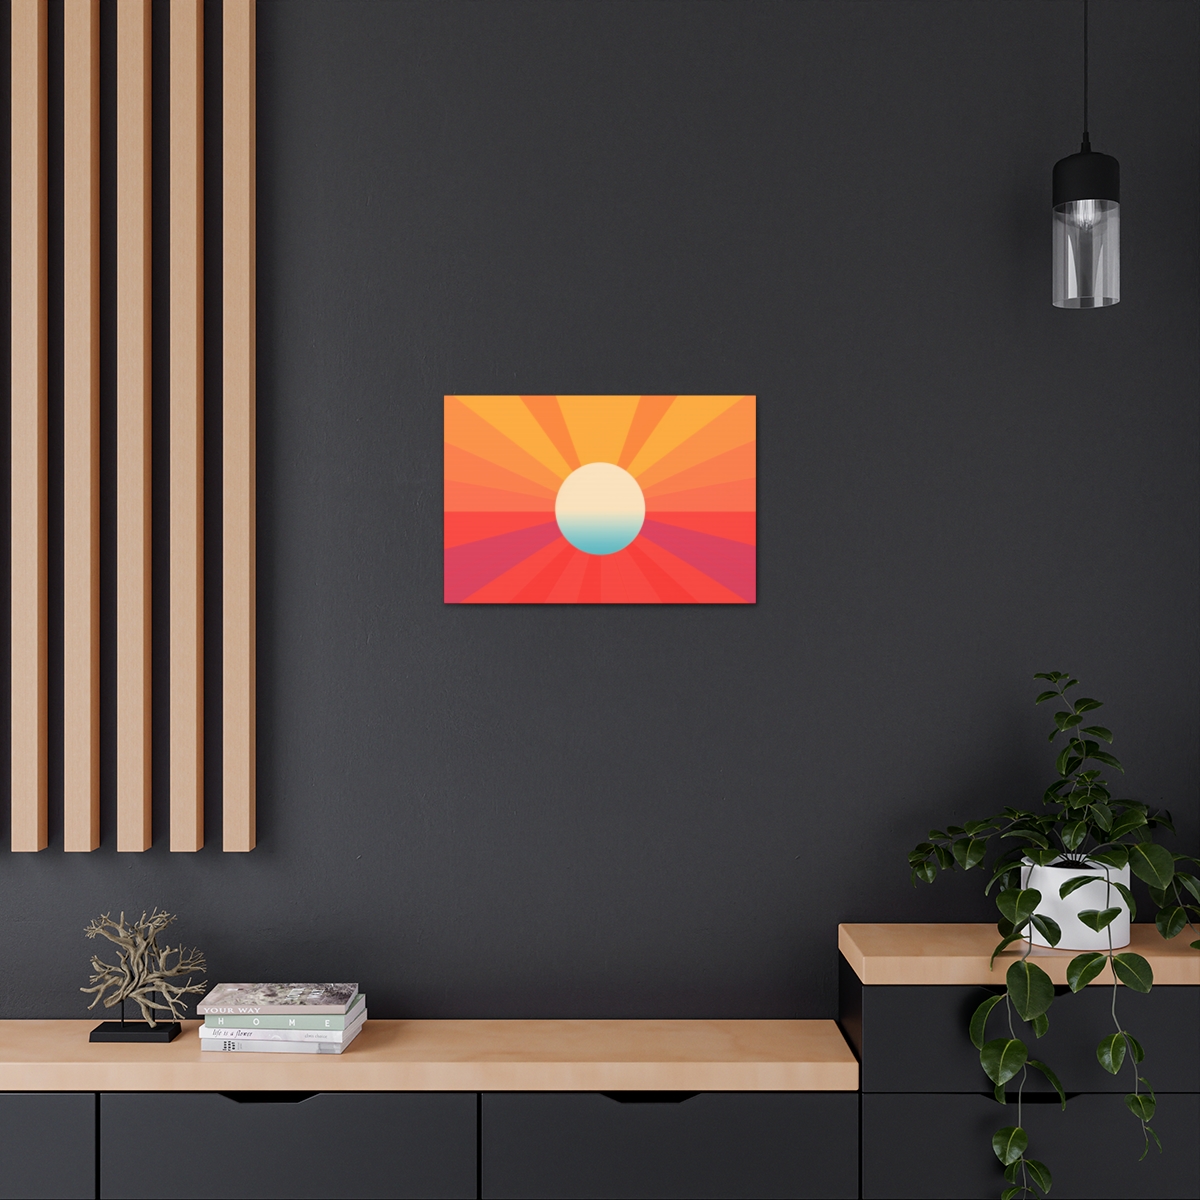 Abstract Sun Art Canvas Print: The Center